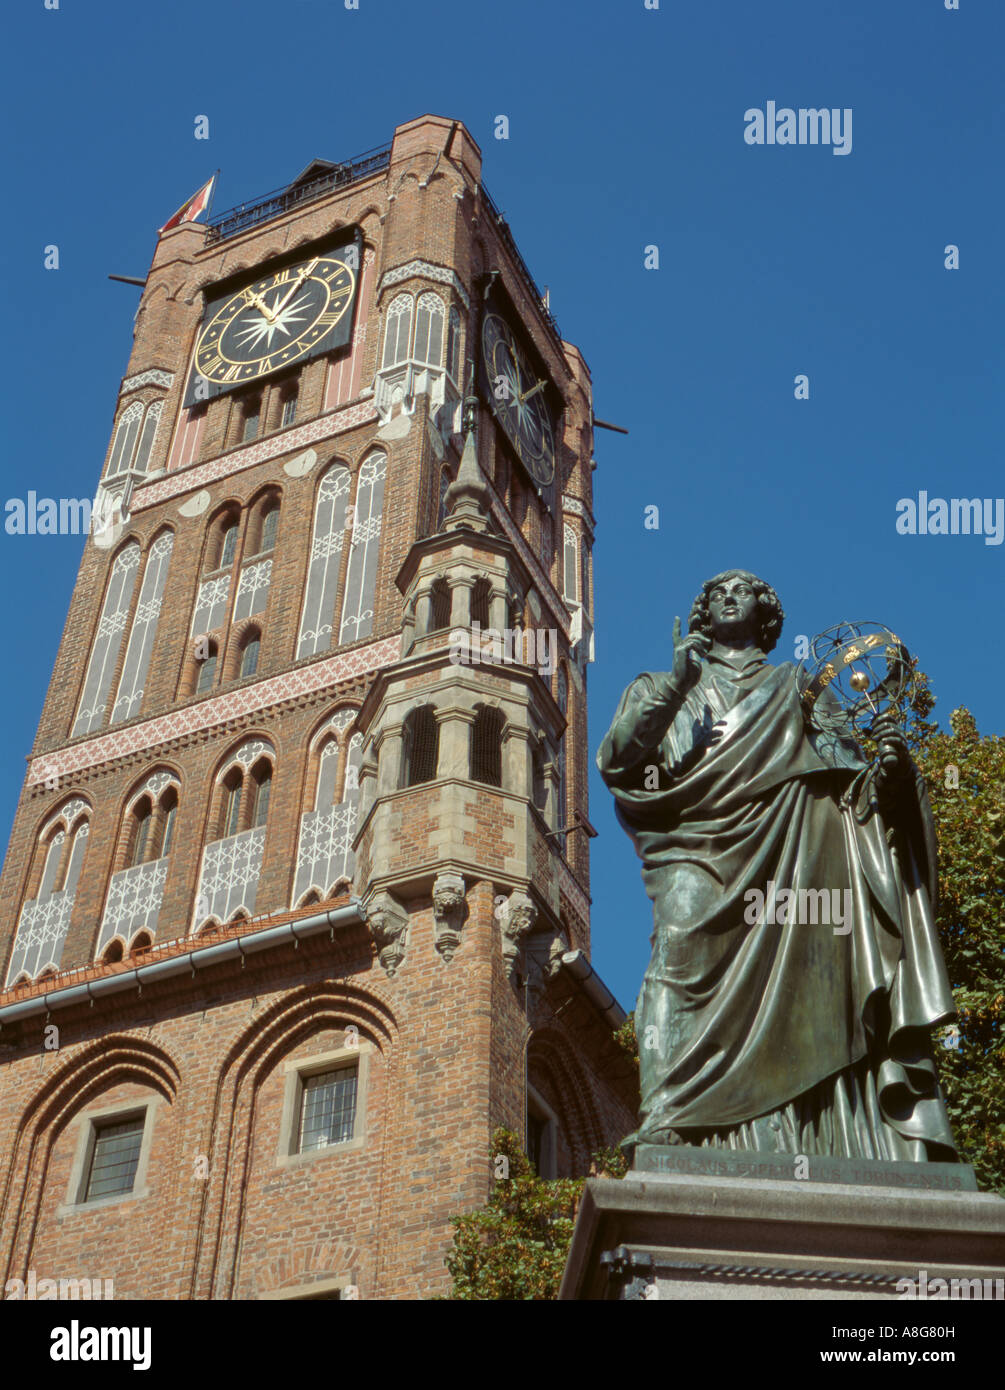 Statue of Mikolaj Kopernik ( Nicolaus Copernicus ), Rynek Staromiejski ( Old Town Square ), Torun, Pomerania, Poland. Stock Photo